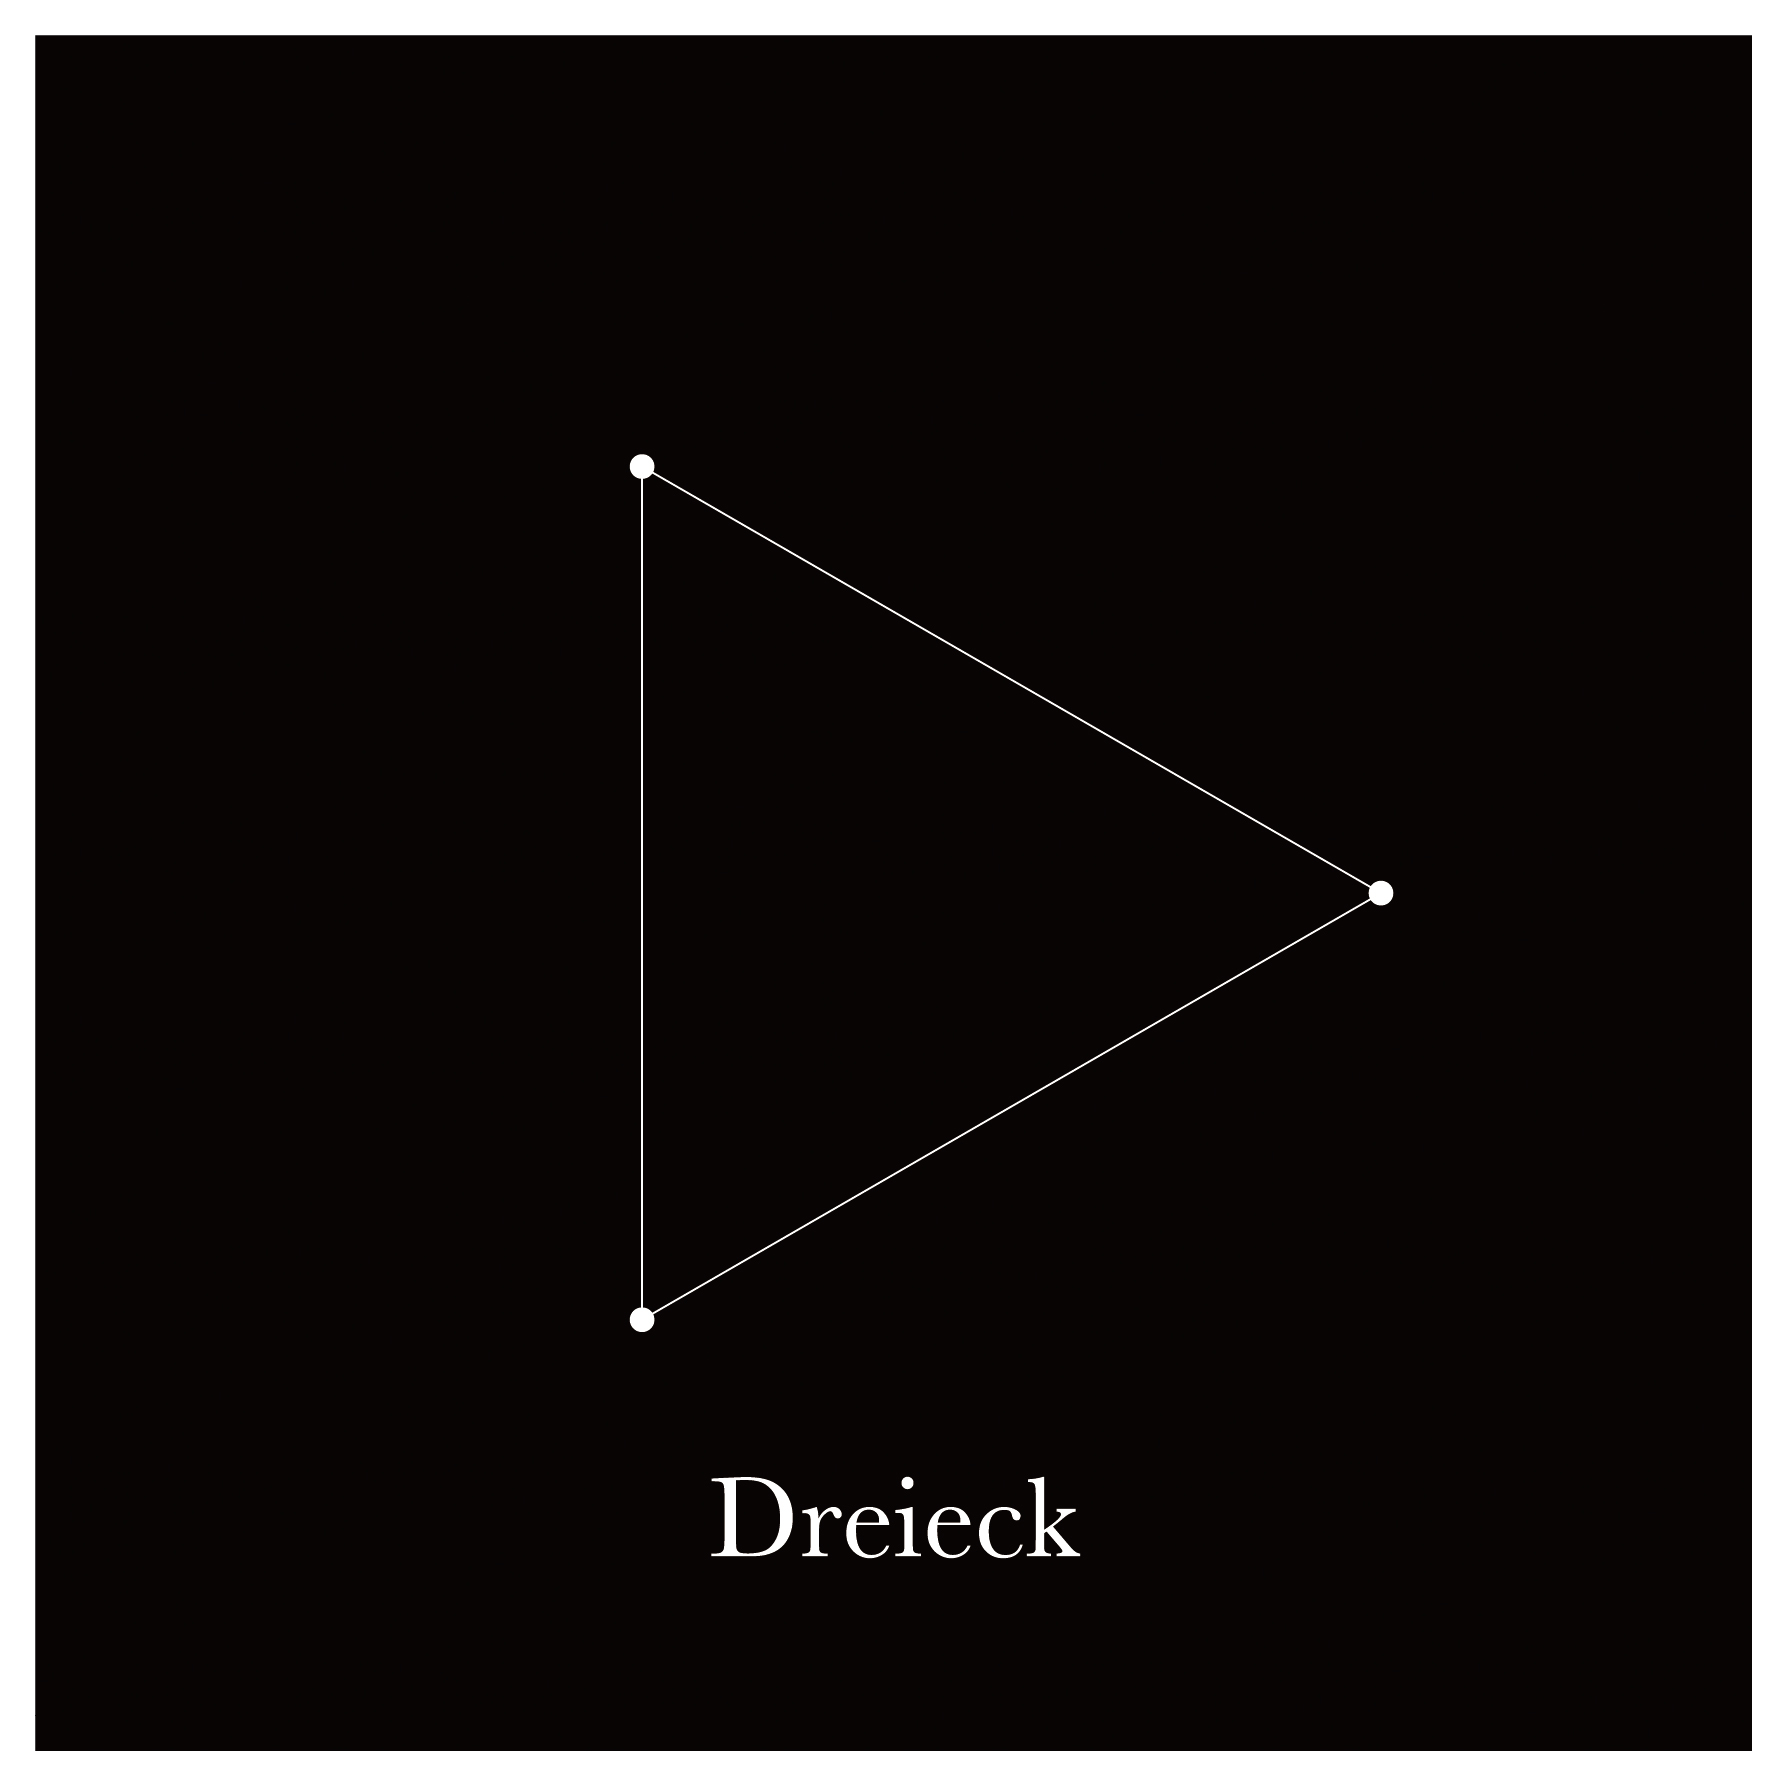 Livemasters Inc. 5th Anniversary Tour "Dreieck”